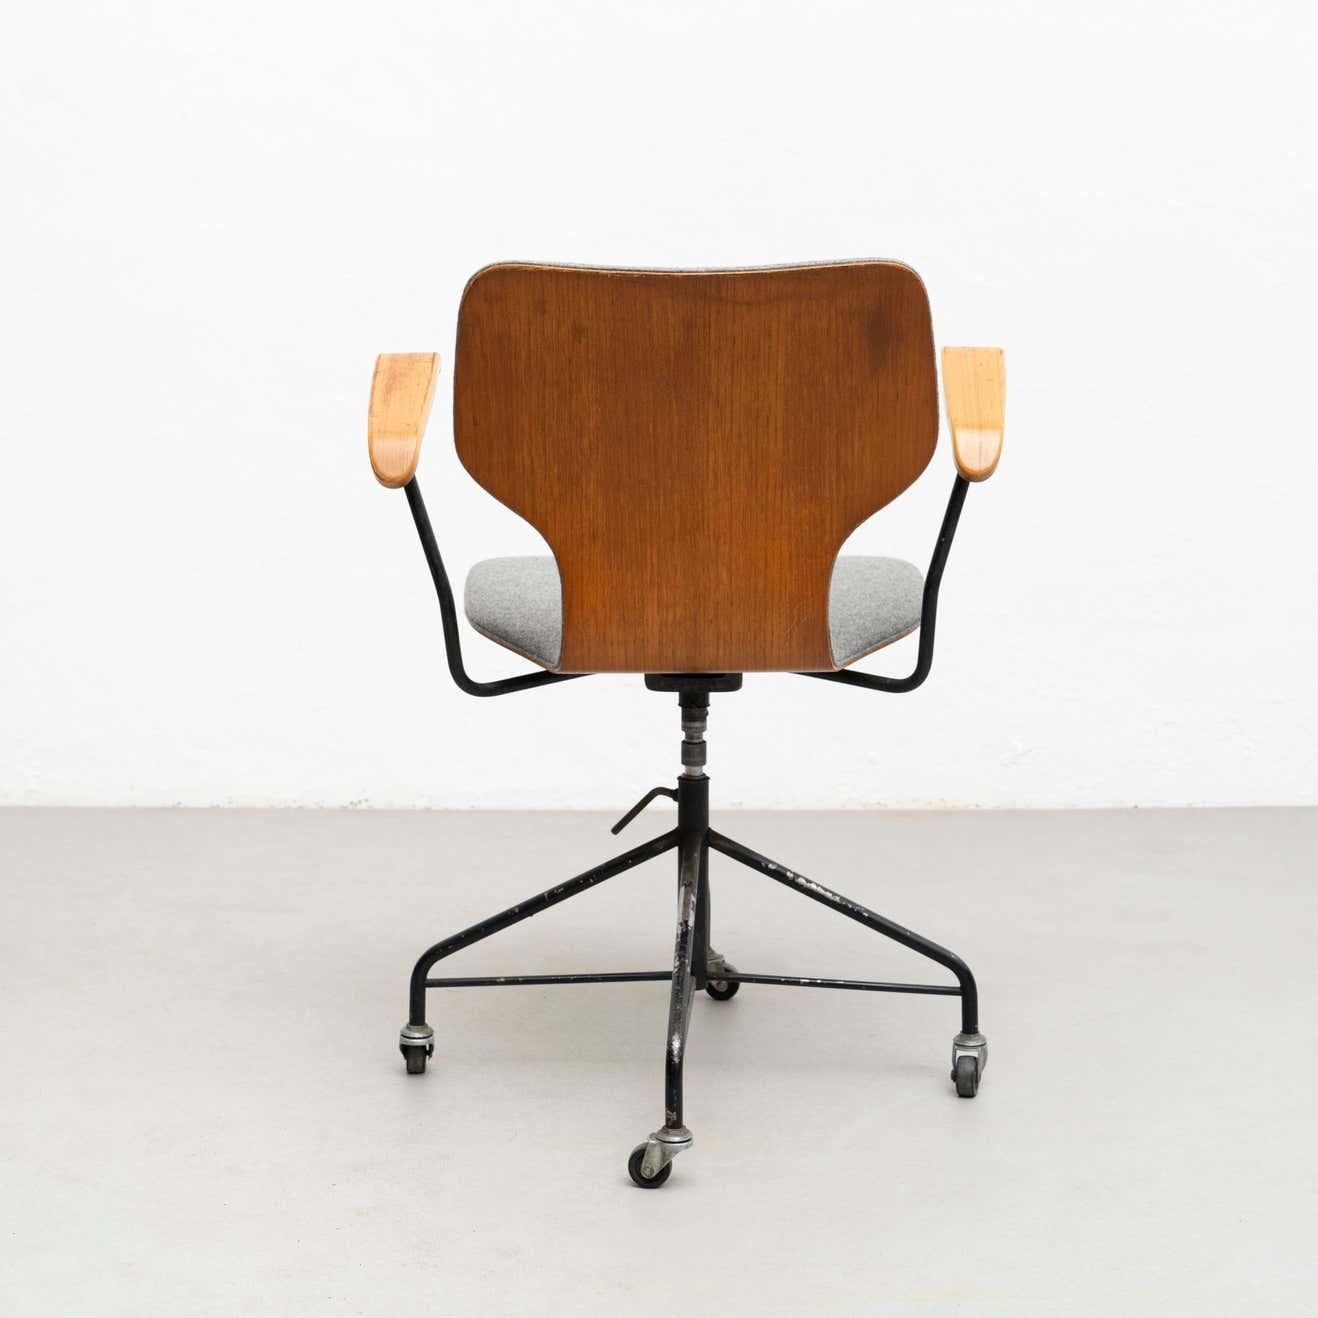 Japanese Isamu Kenmochi Laminated Wood and Grey Fabric Swivel Office Chair, circa 1950